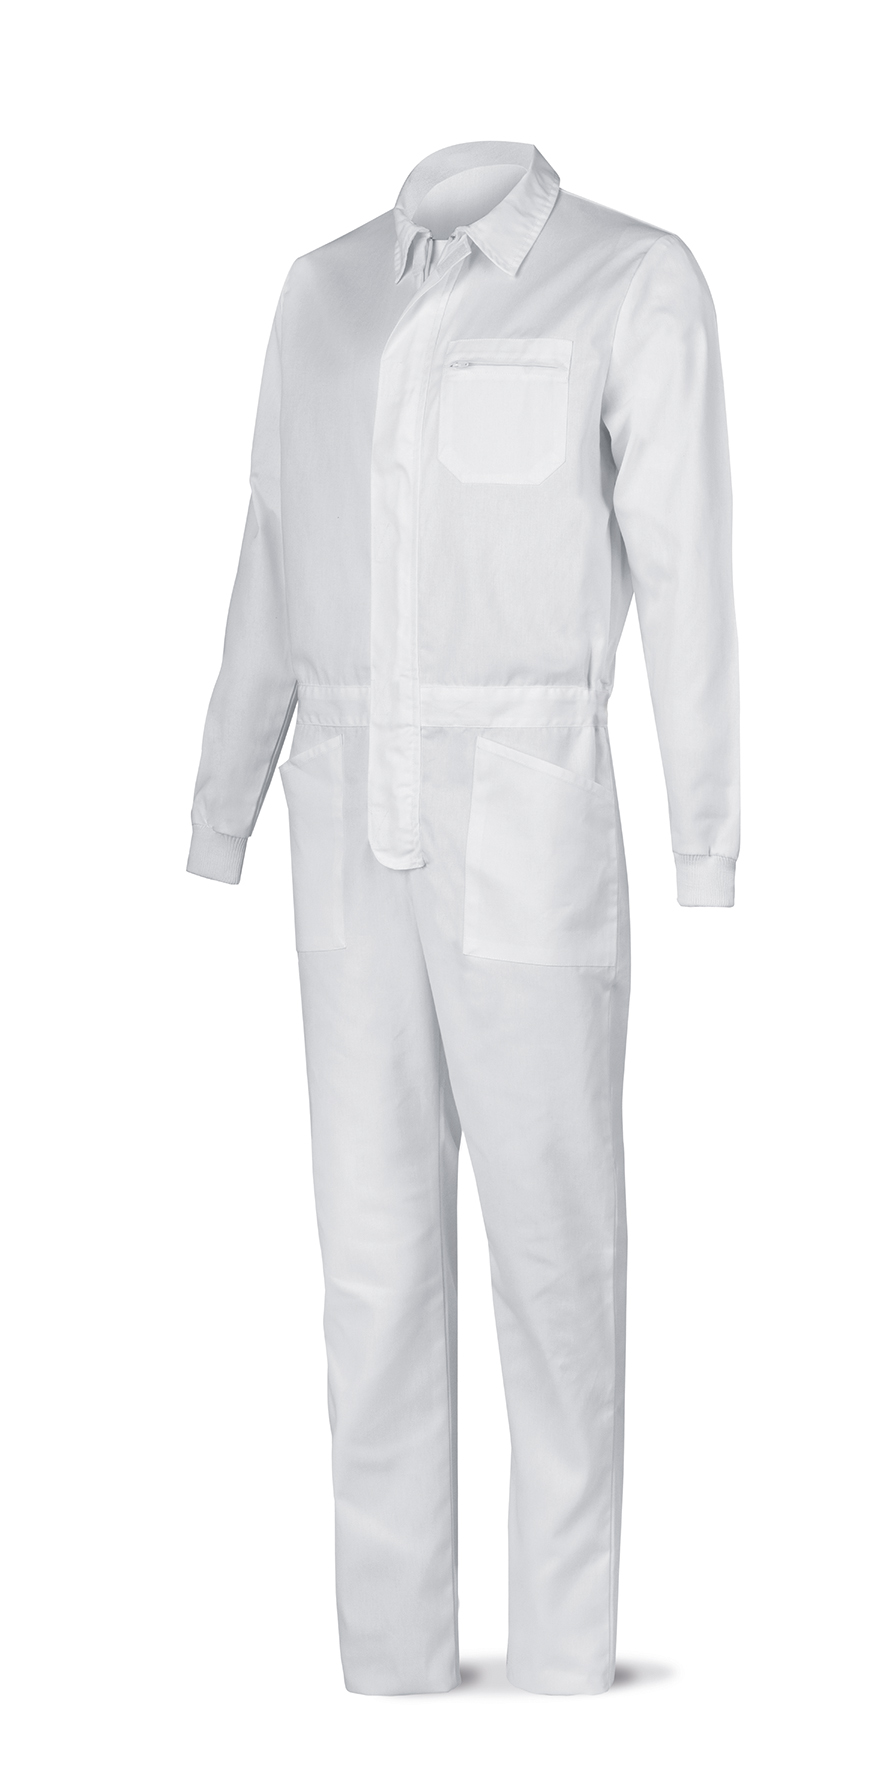 388-BTB Workwear Basic Line White Tergal coverall 200 gr.